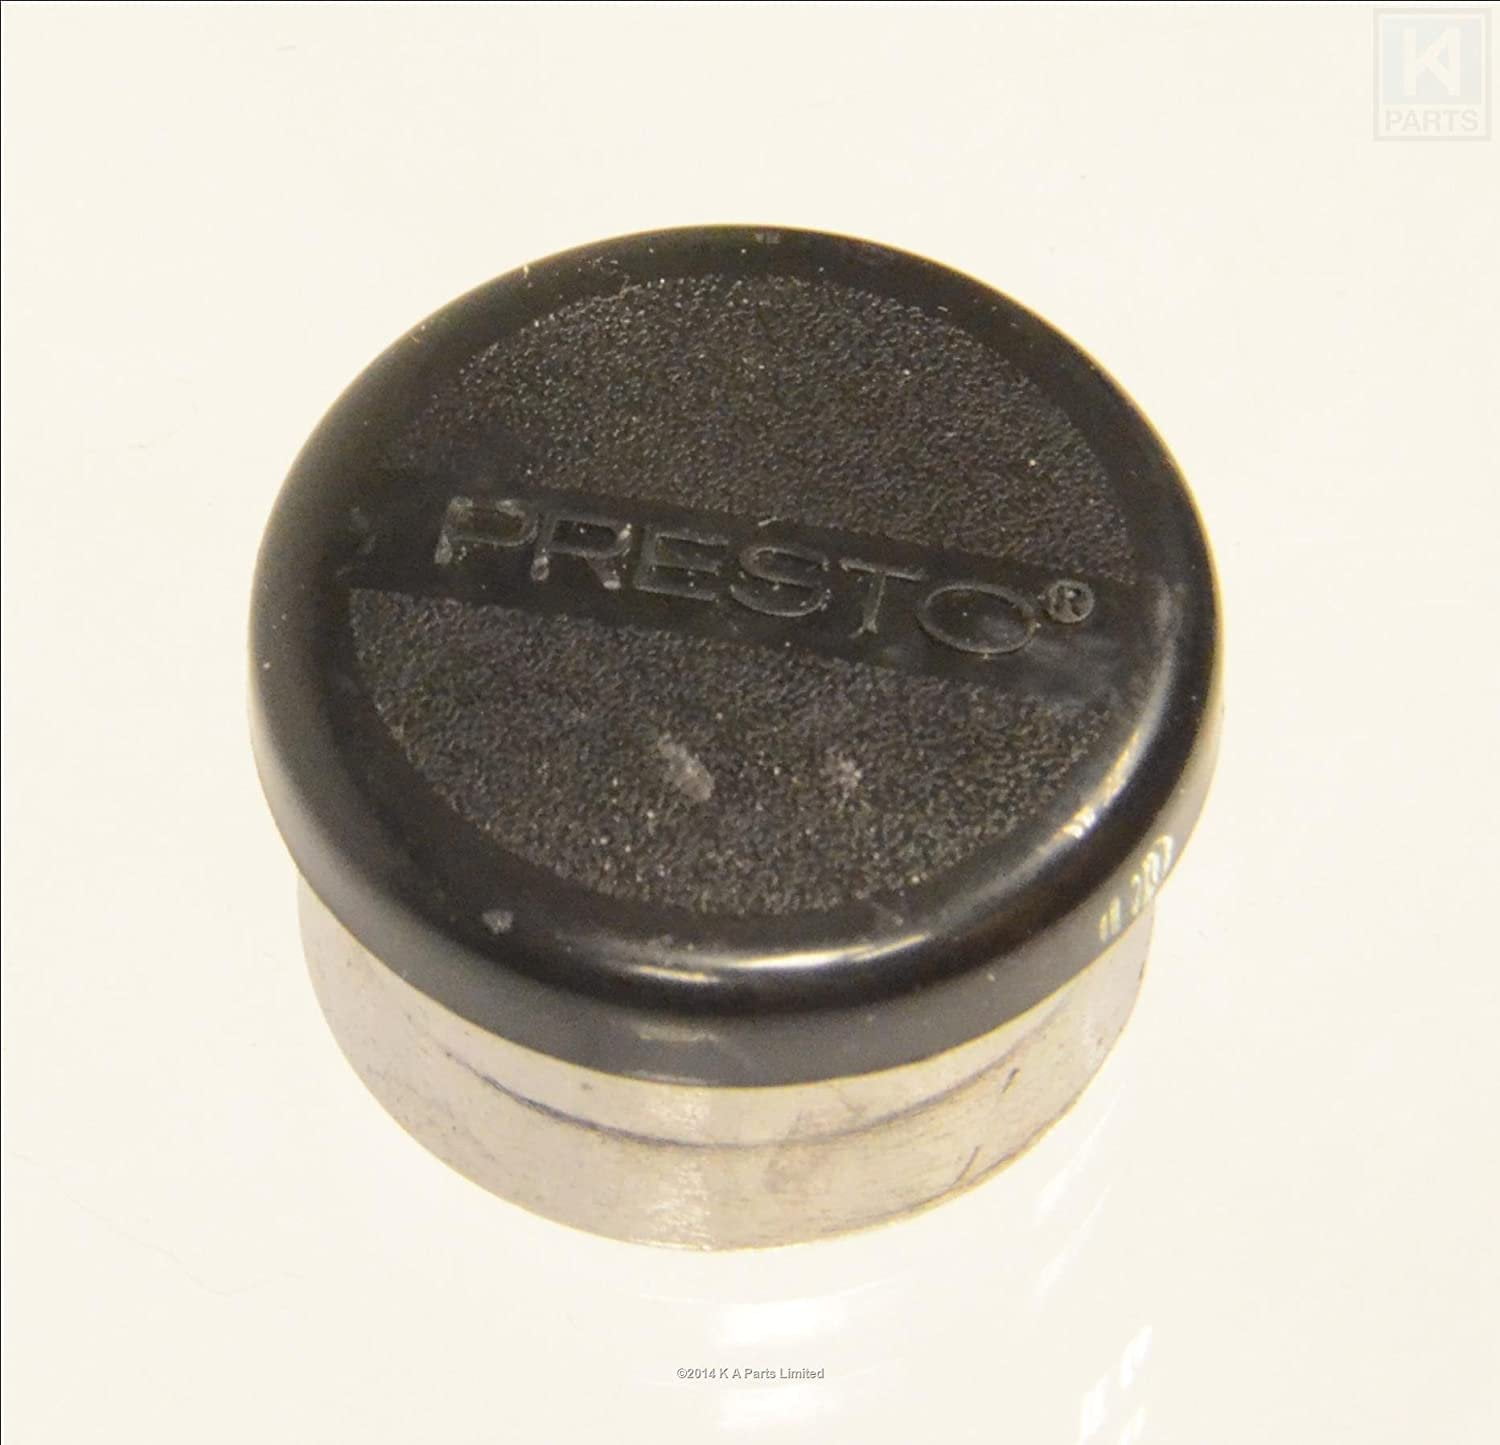 Presto Pressure Cooker Regulator 09978 